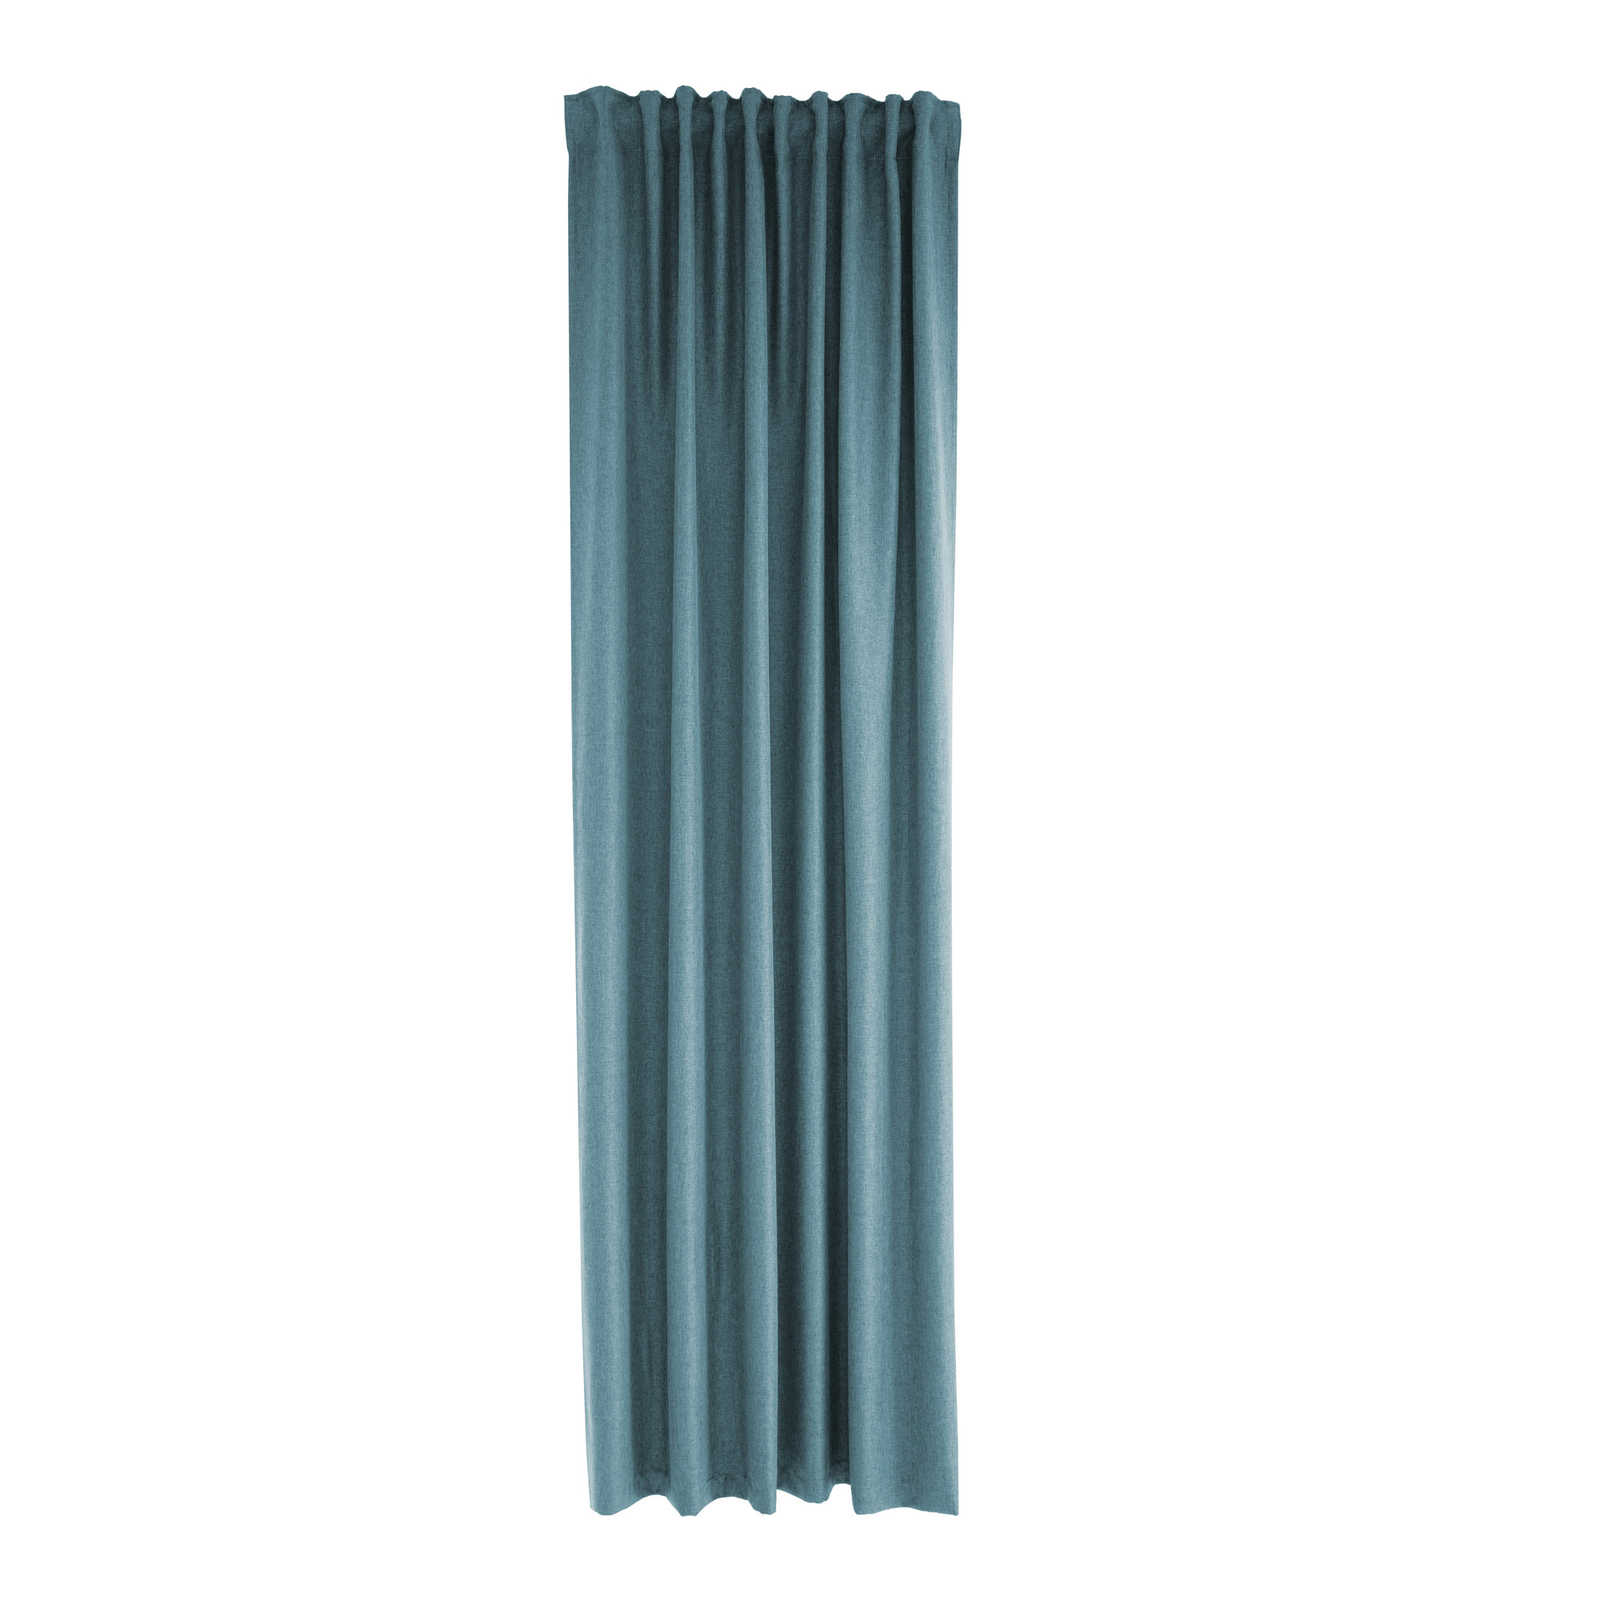         Fular decorativo 140 cm x 245 cm Fibra Artificial Azul Claro
    